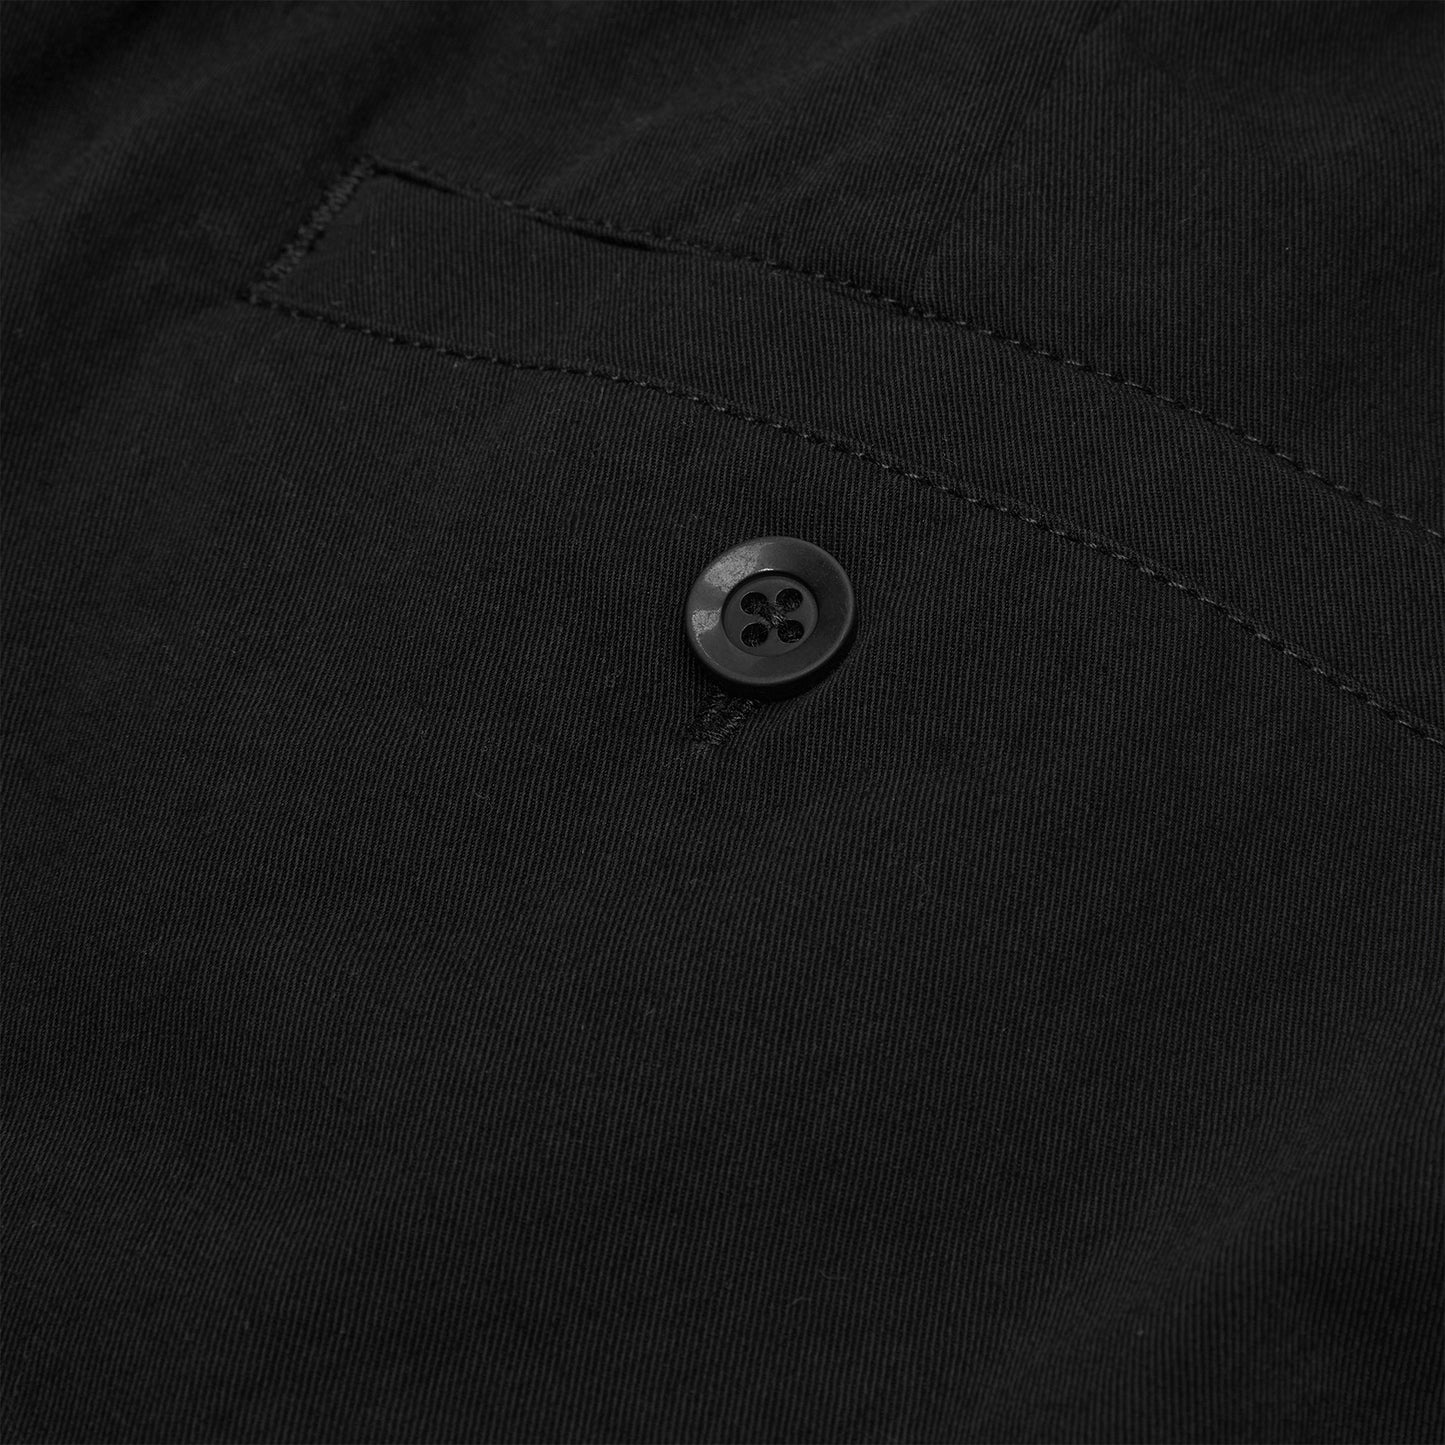 Grand Collection Cotton Pant (Black)